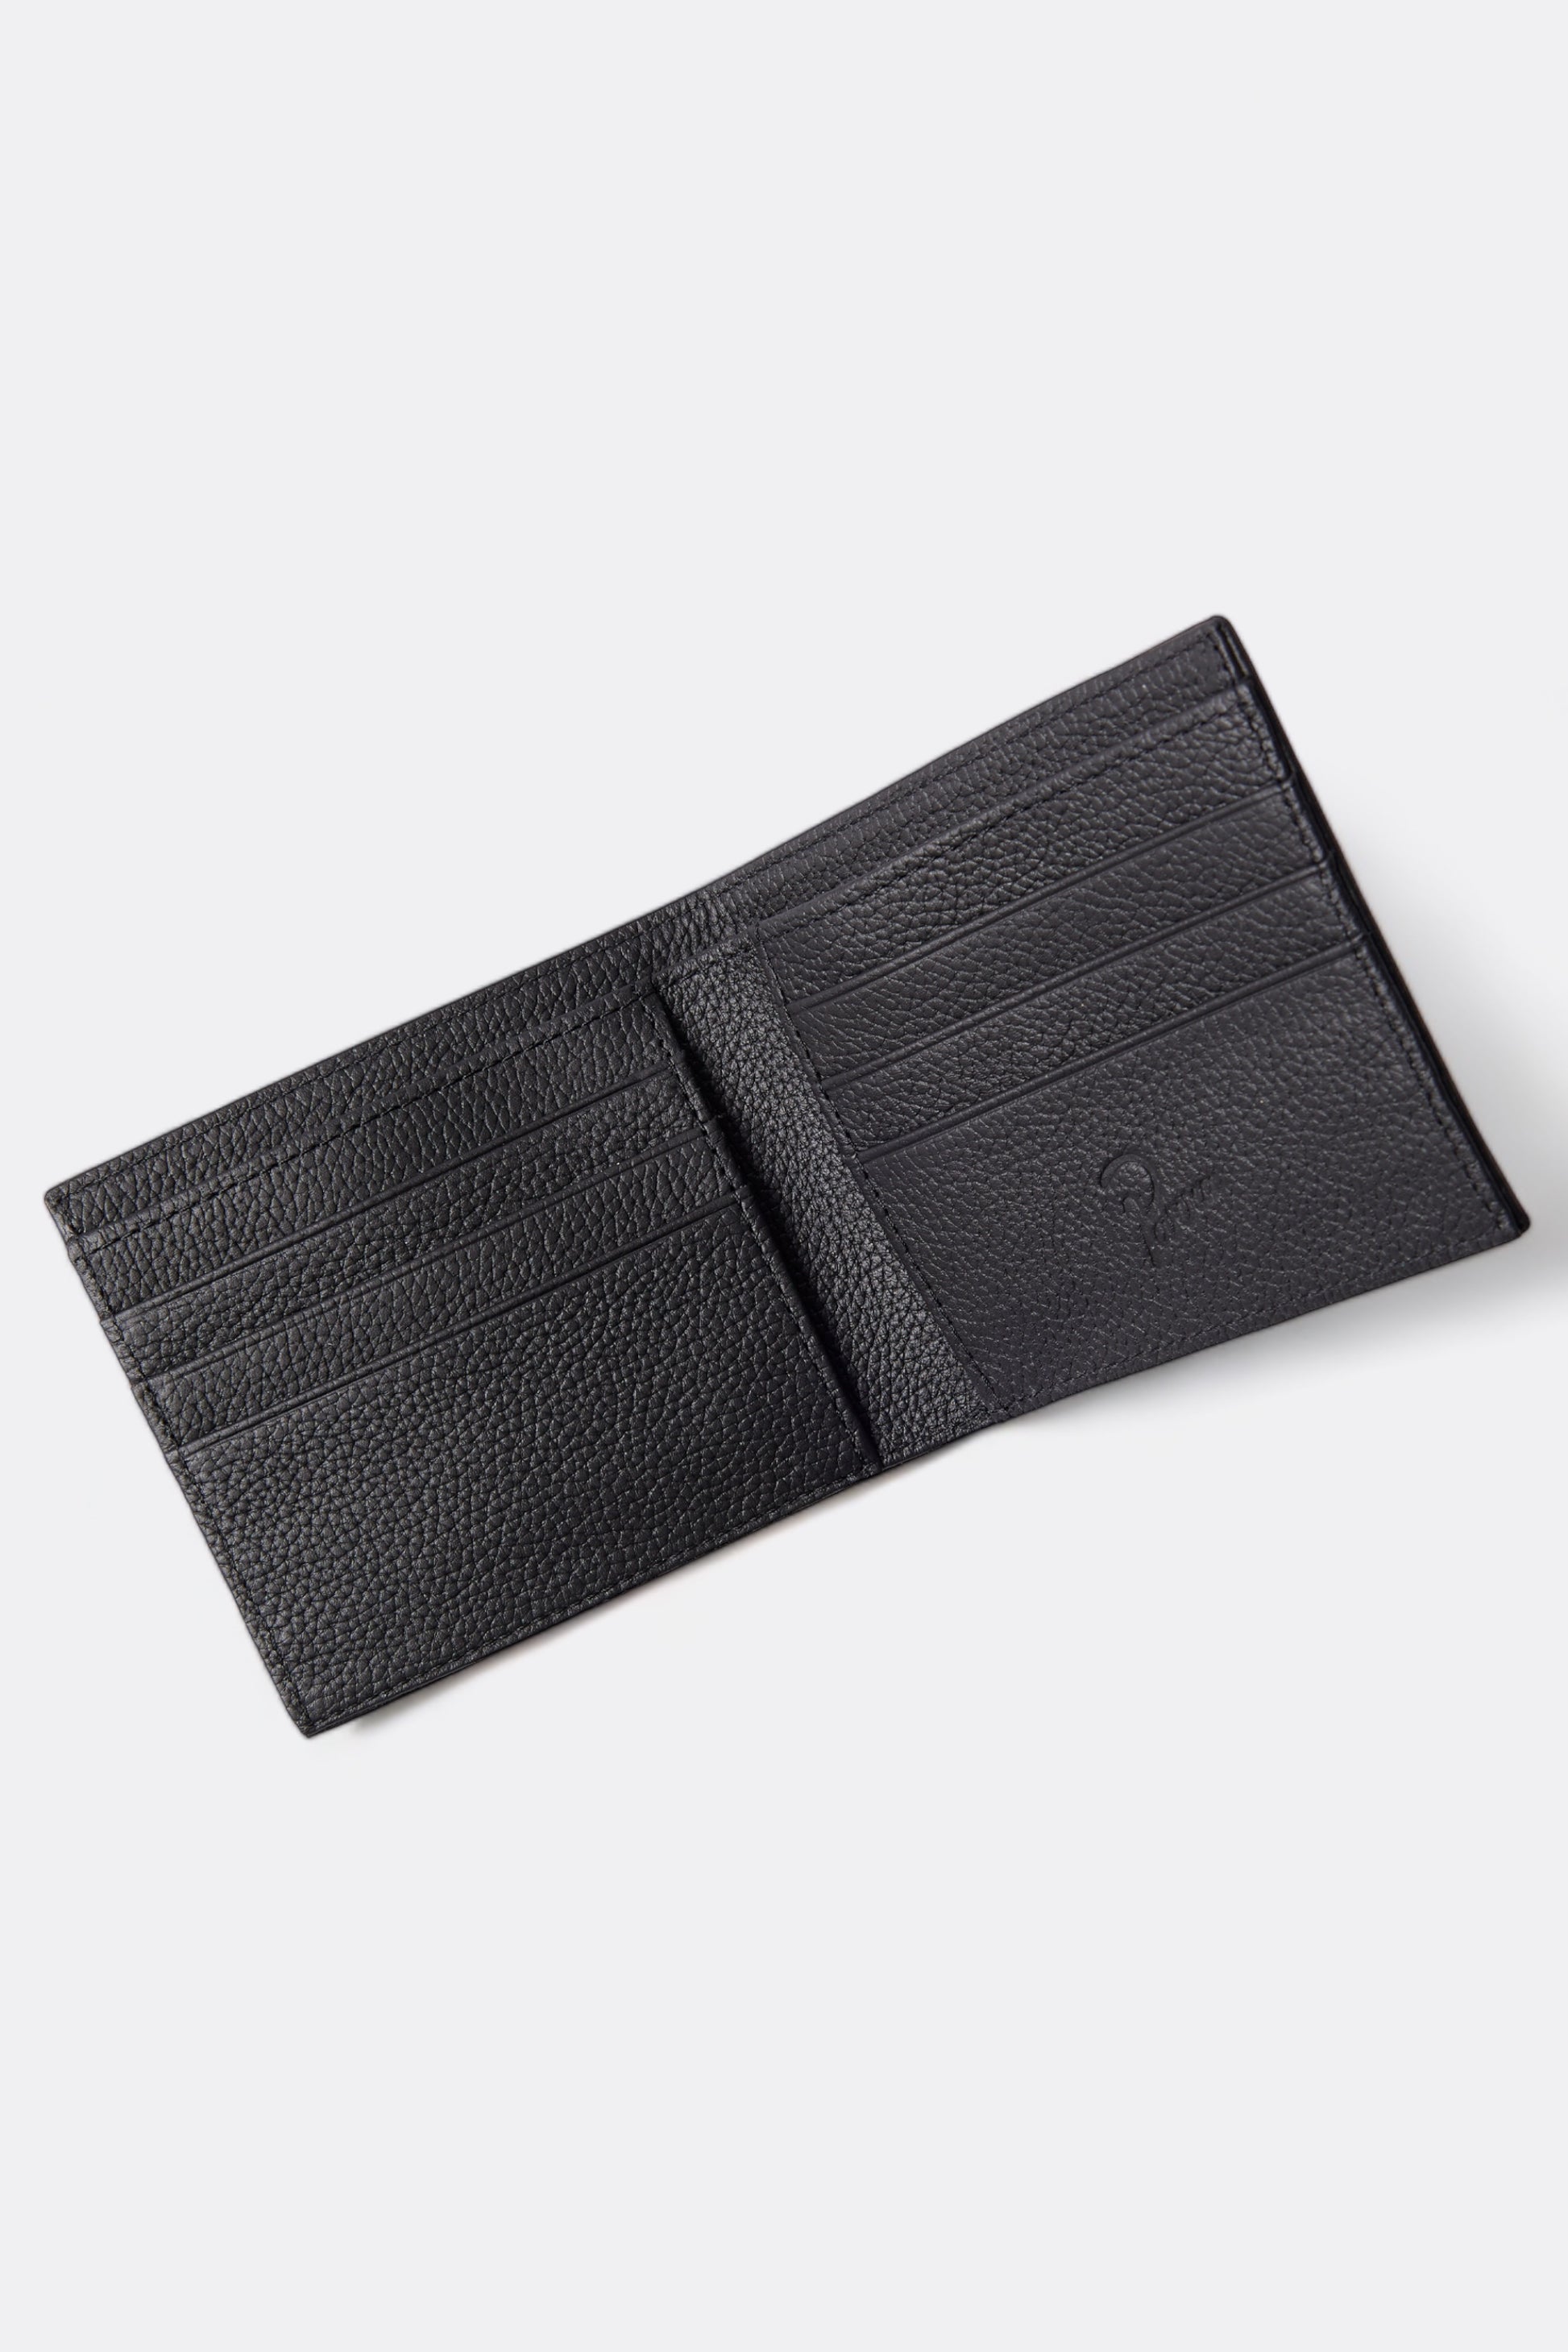 Parra - Strawberry Money Wallet (Black)